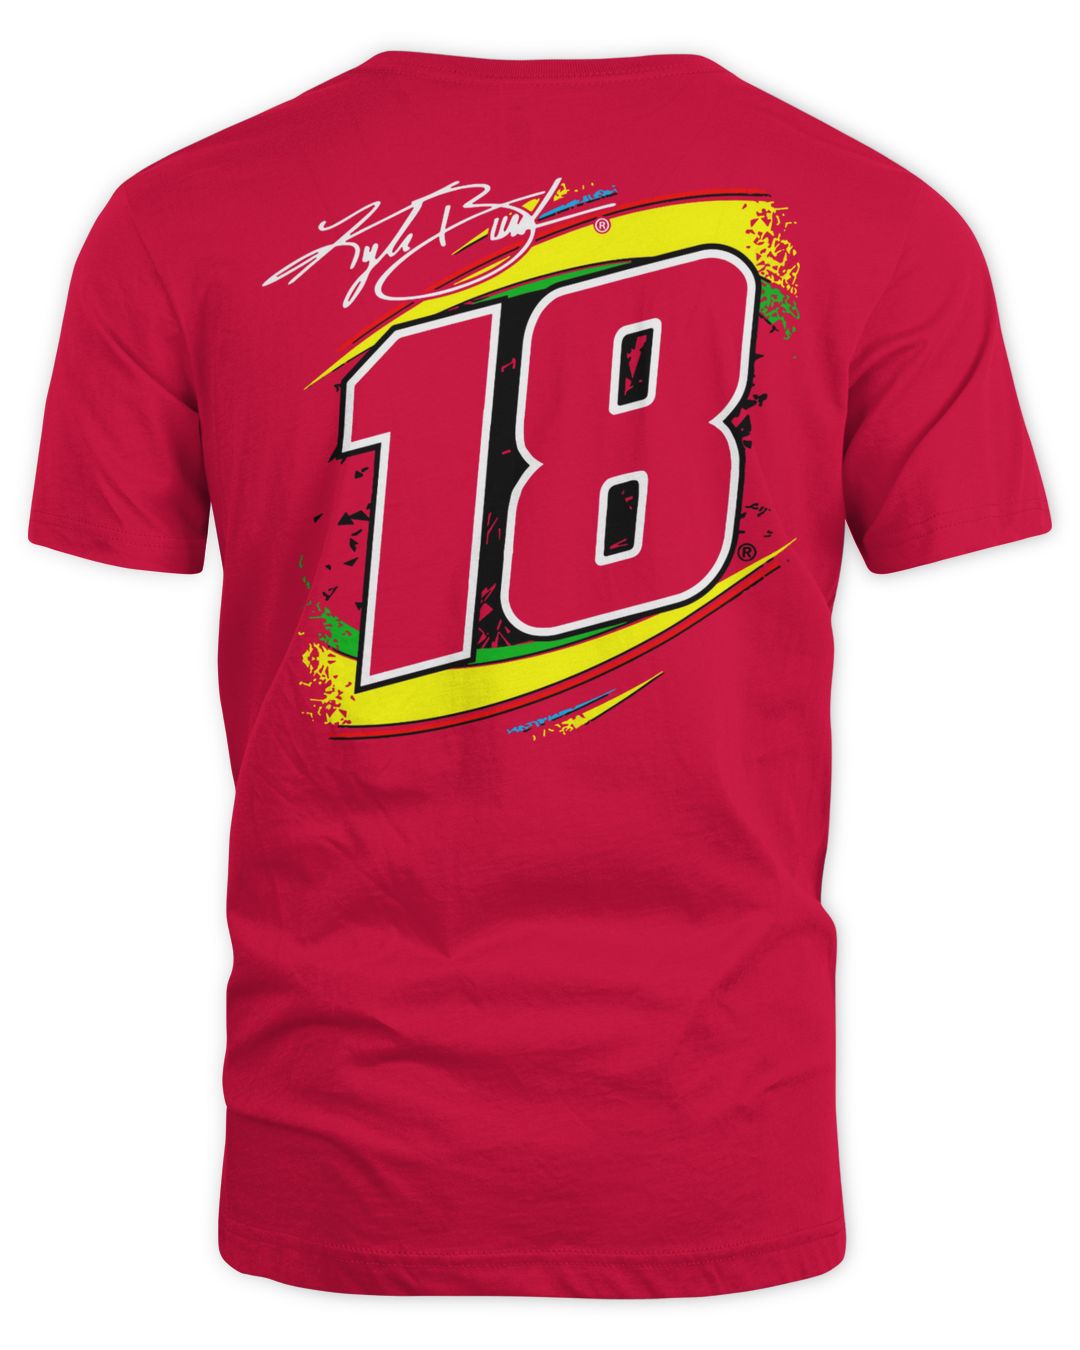 Kyle Busch Joe Gibbs Racing Team Collection M&Ms Xtreme Shirt